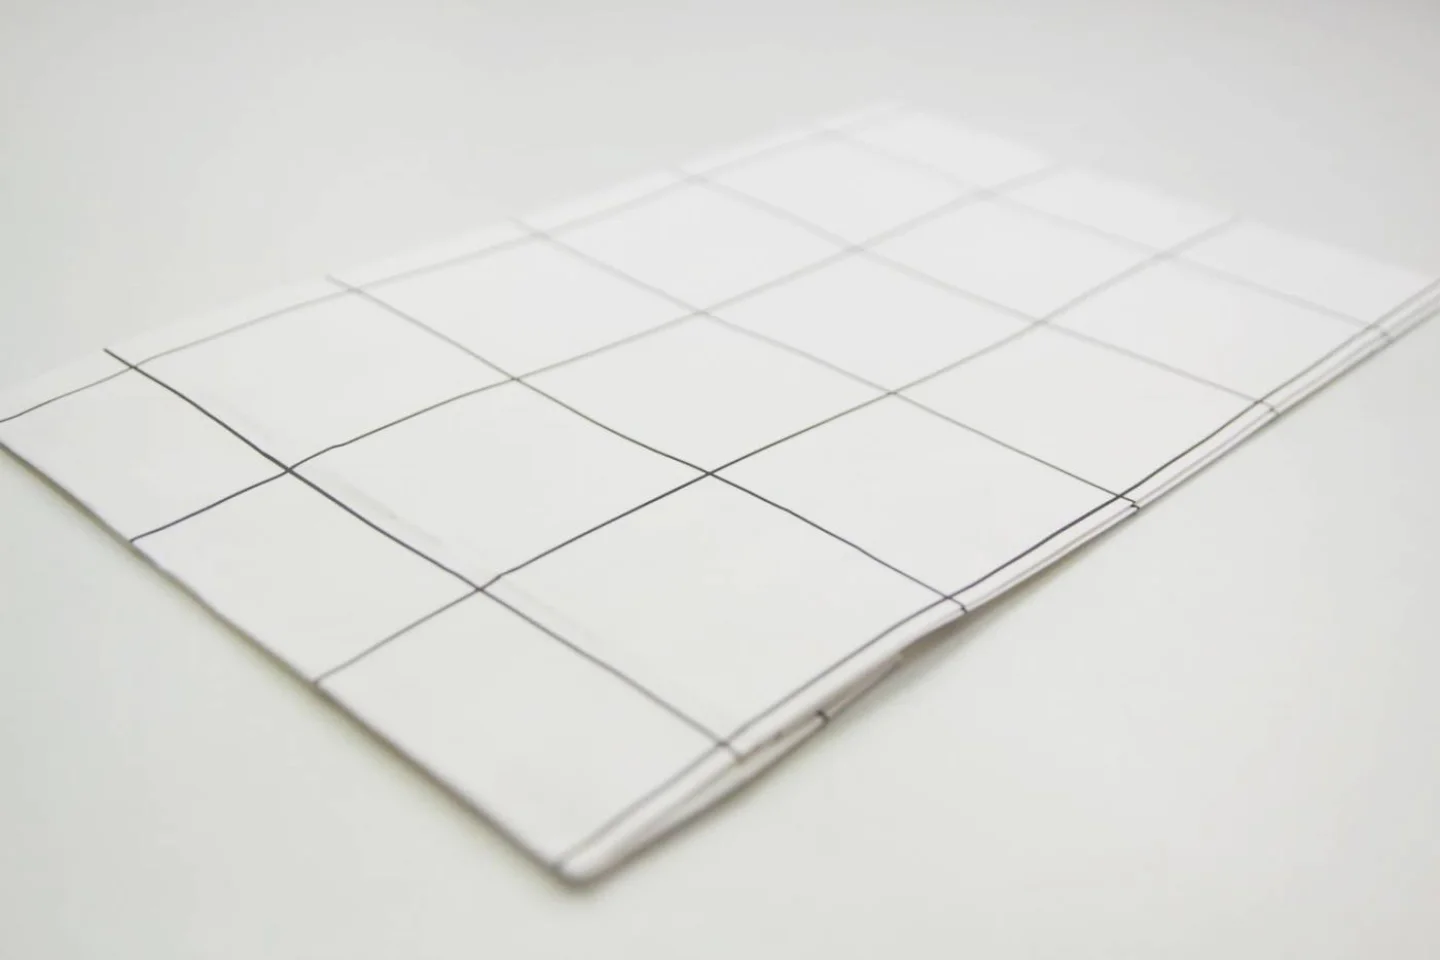 blokbodemzakje grid monochrome zwart wit.